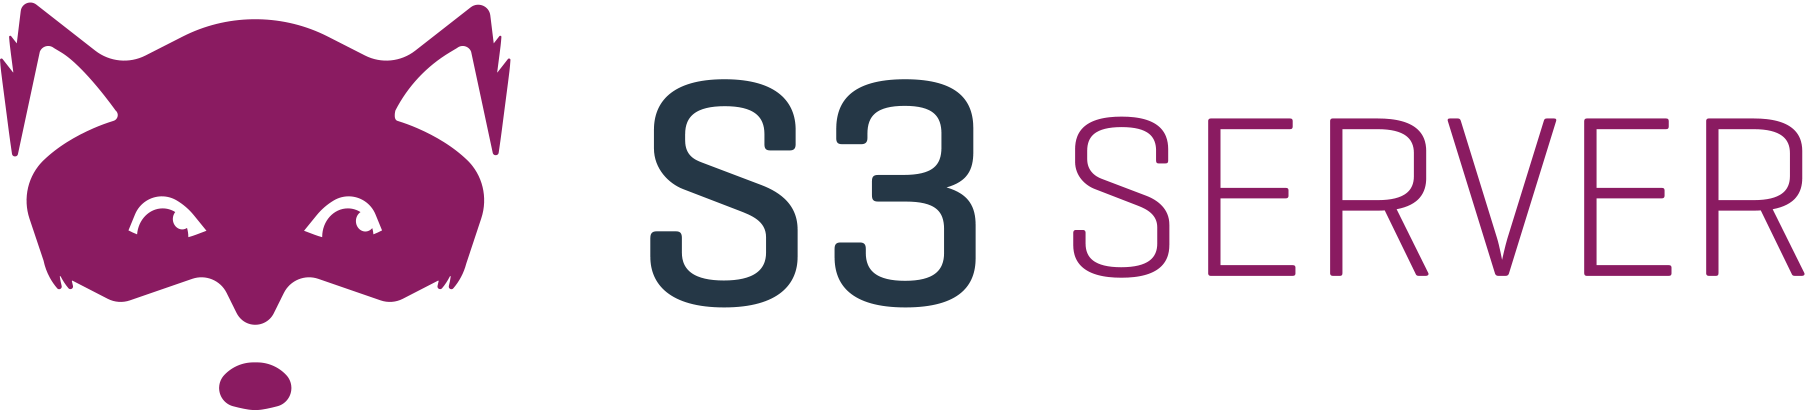 S3 Server logo